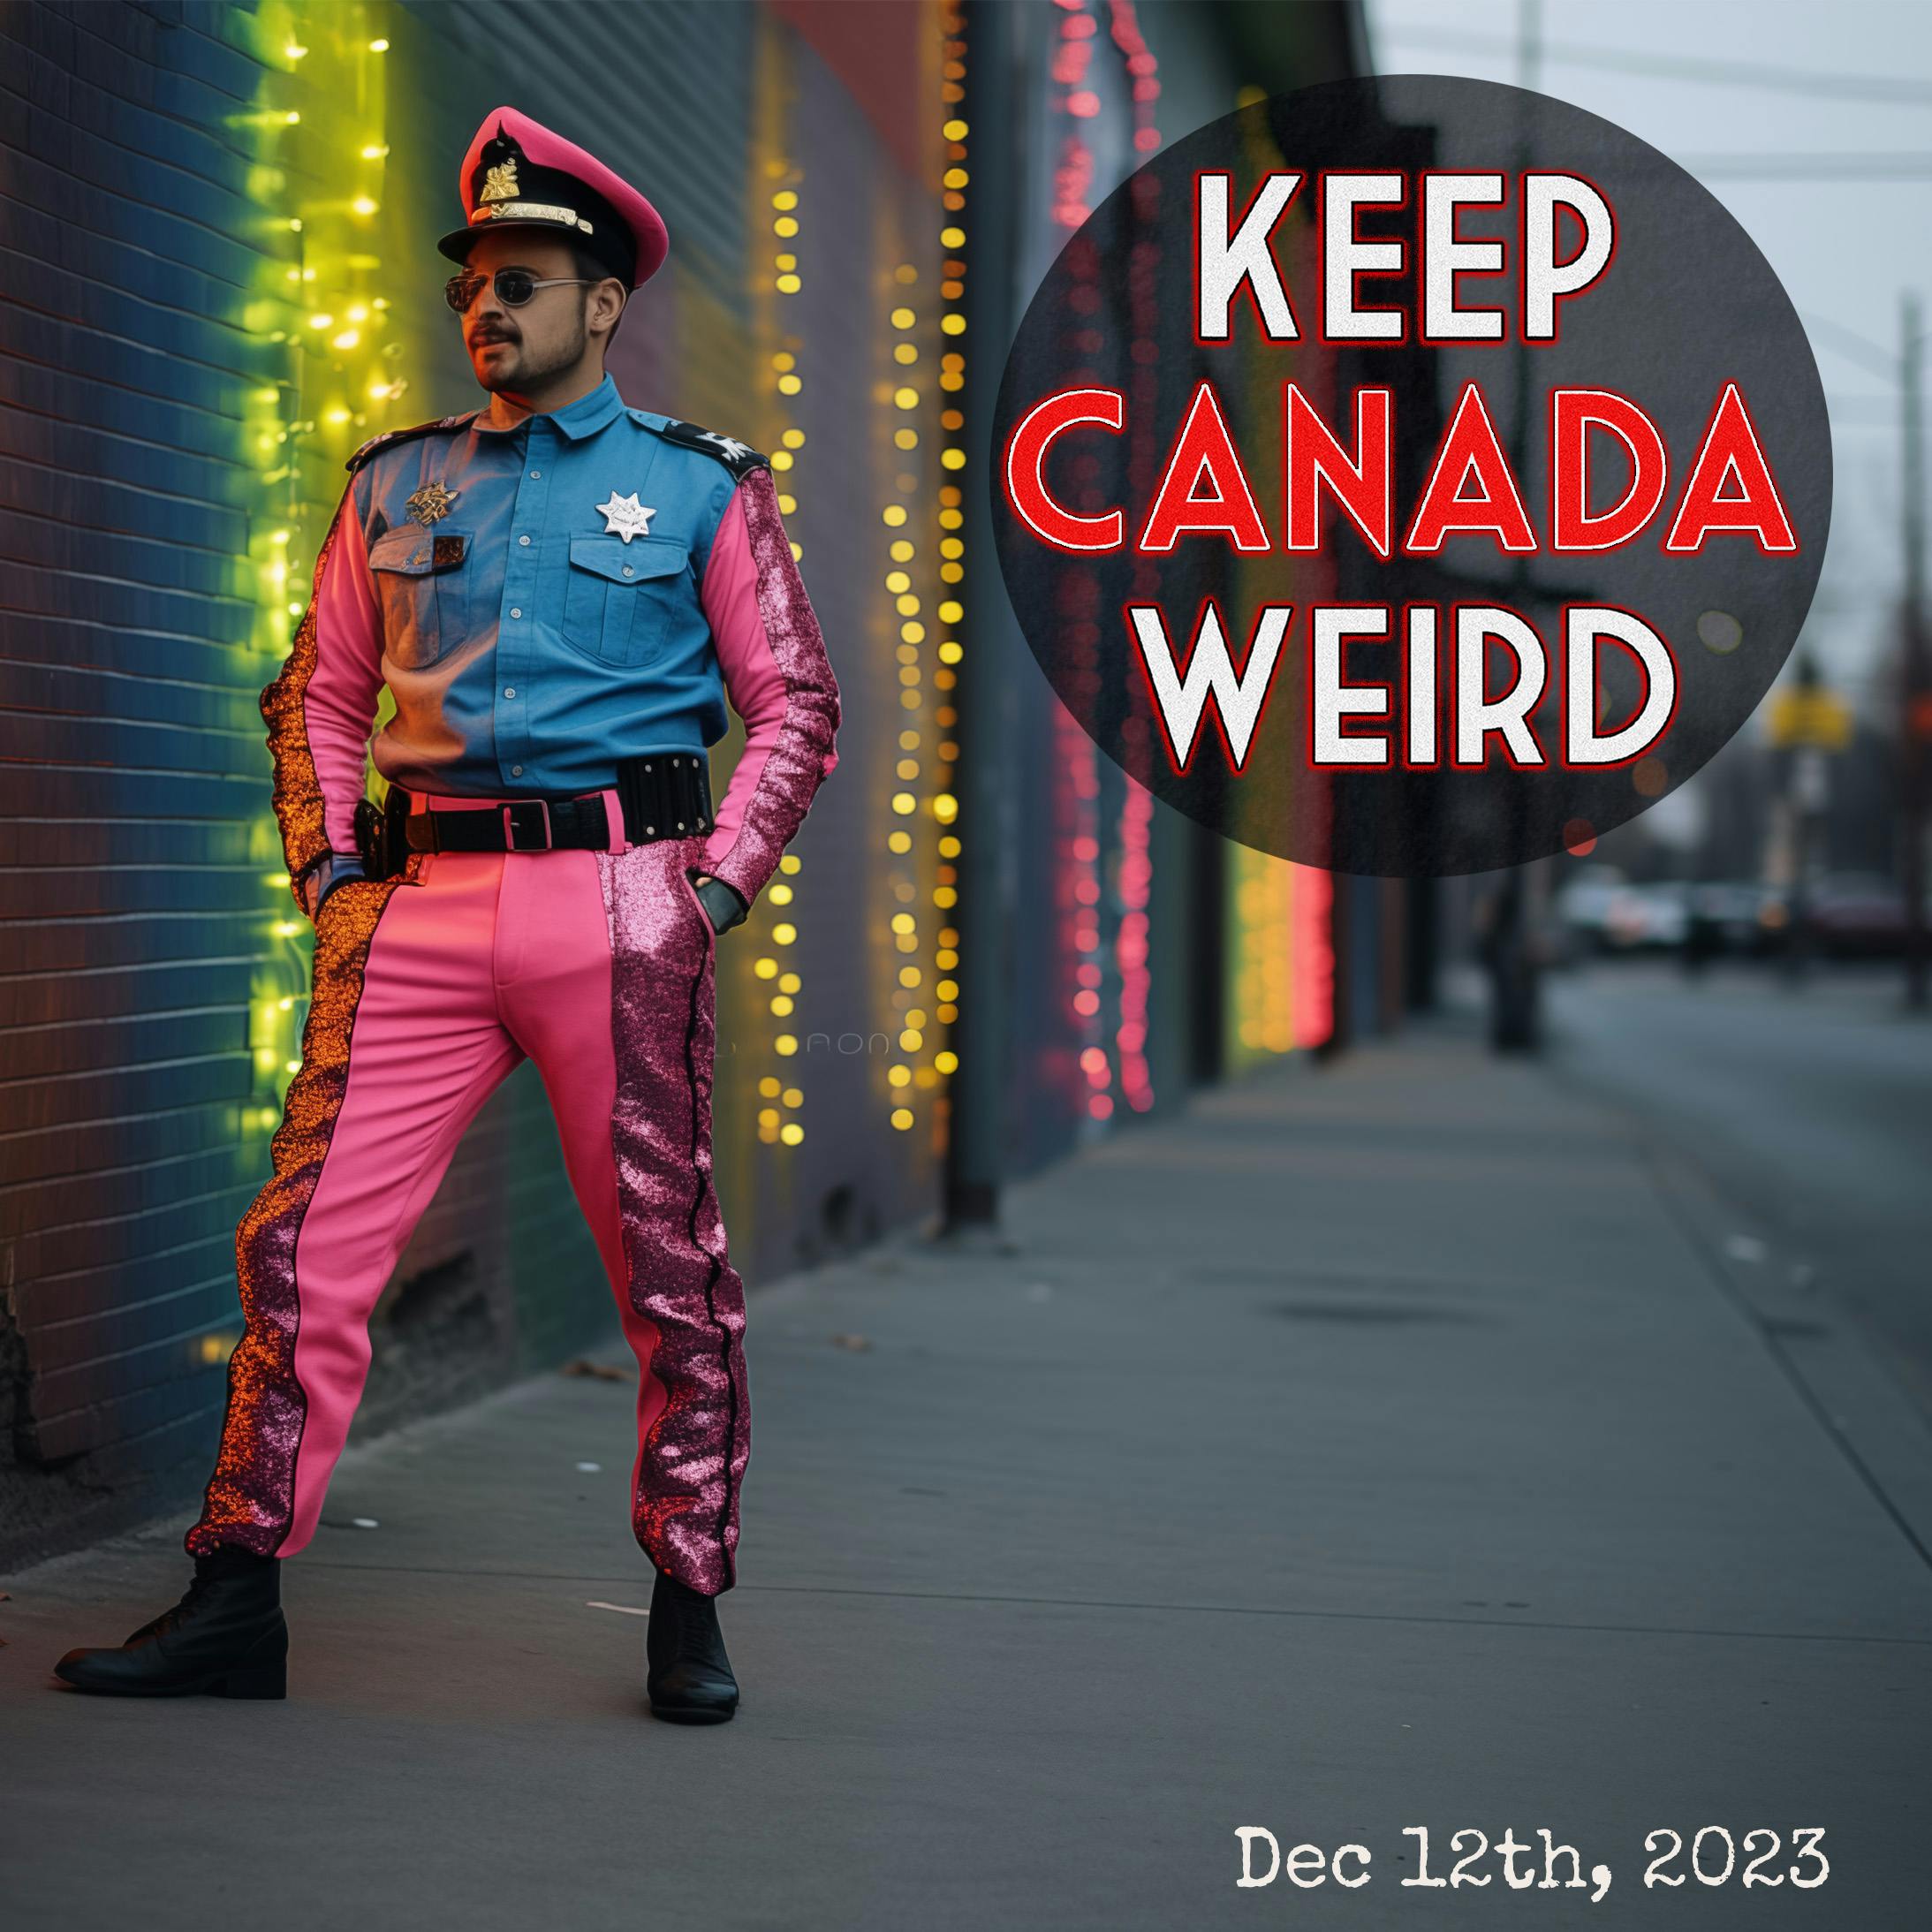 KEEP CANADA WEIRD - Dec 13th, 2023 - thumb tacks, Taylor Swift, Orillia's tree, and weird pants on police